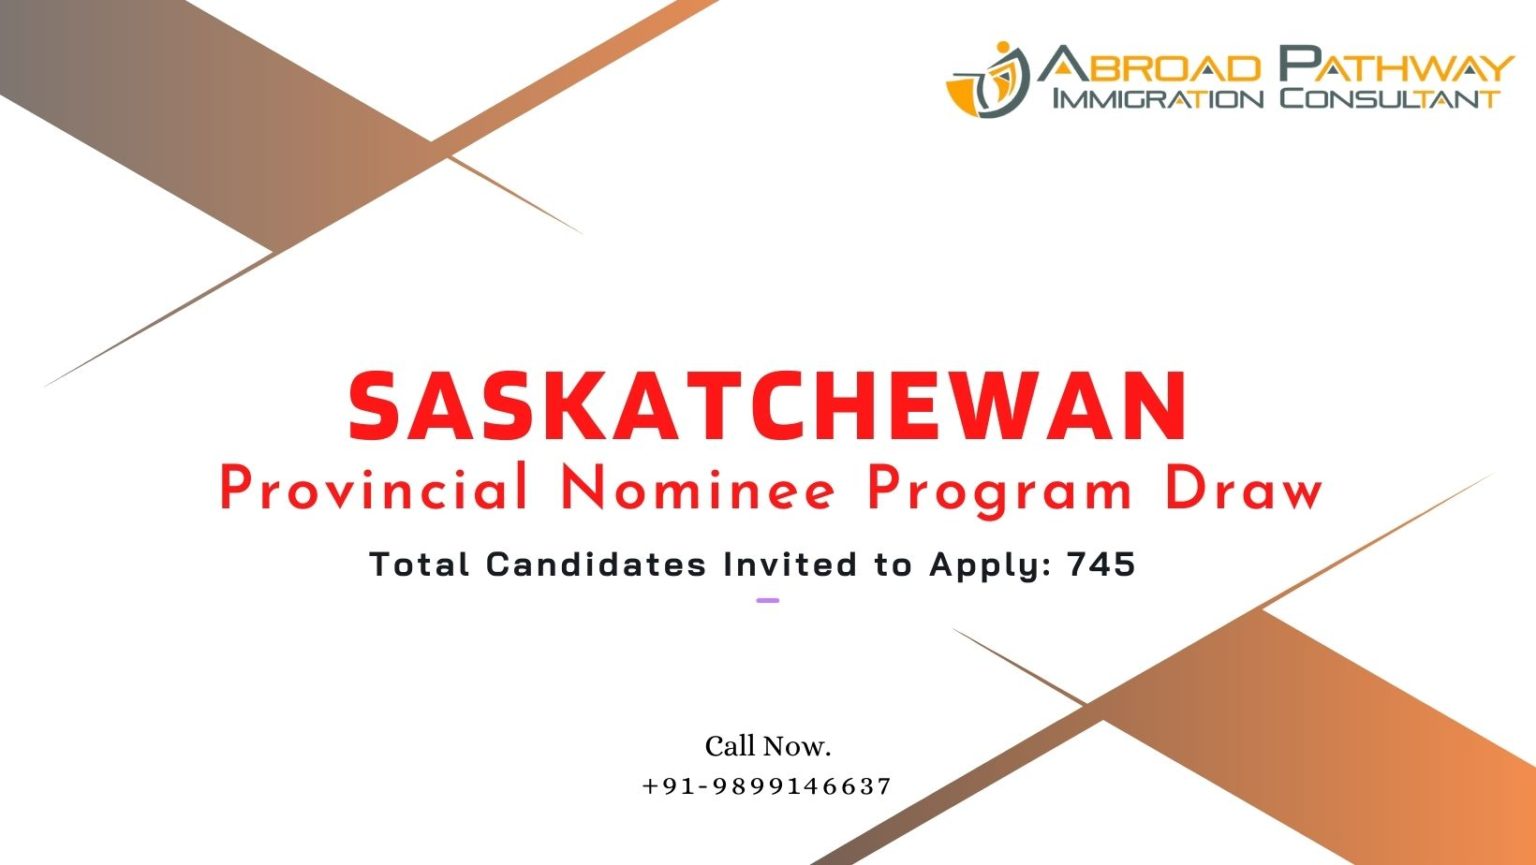 Latest Saskatchewan PNP draw opened on 11 Aug 2022